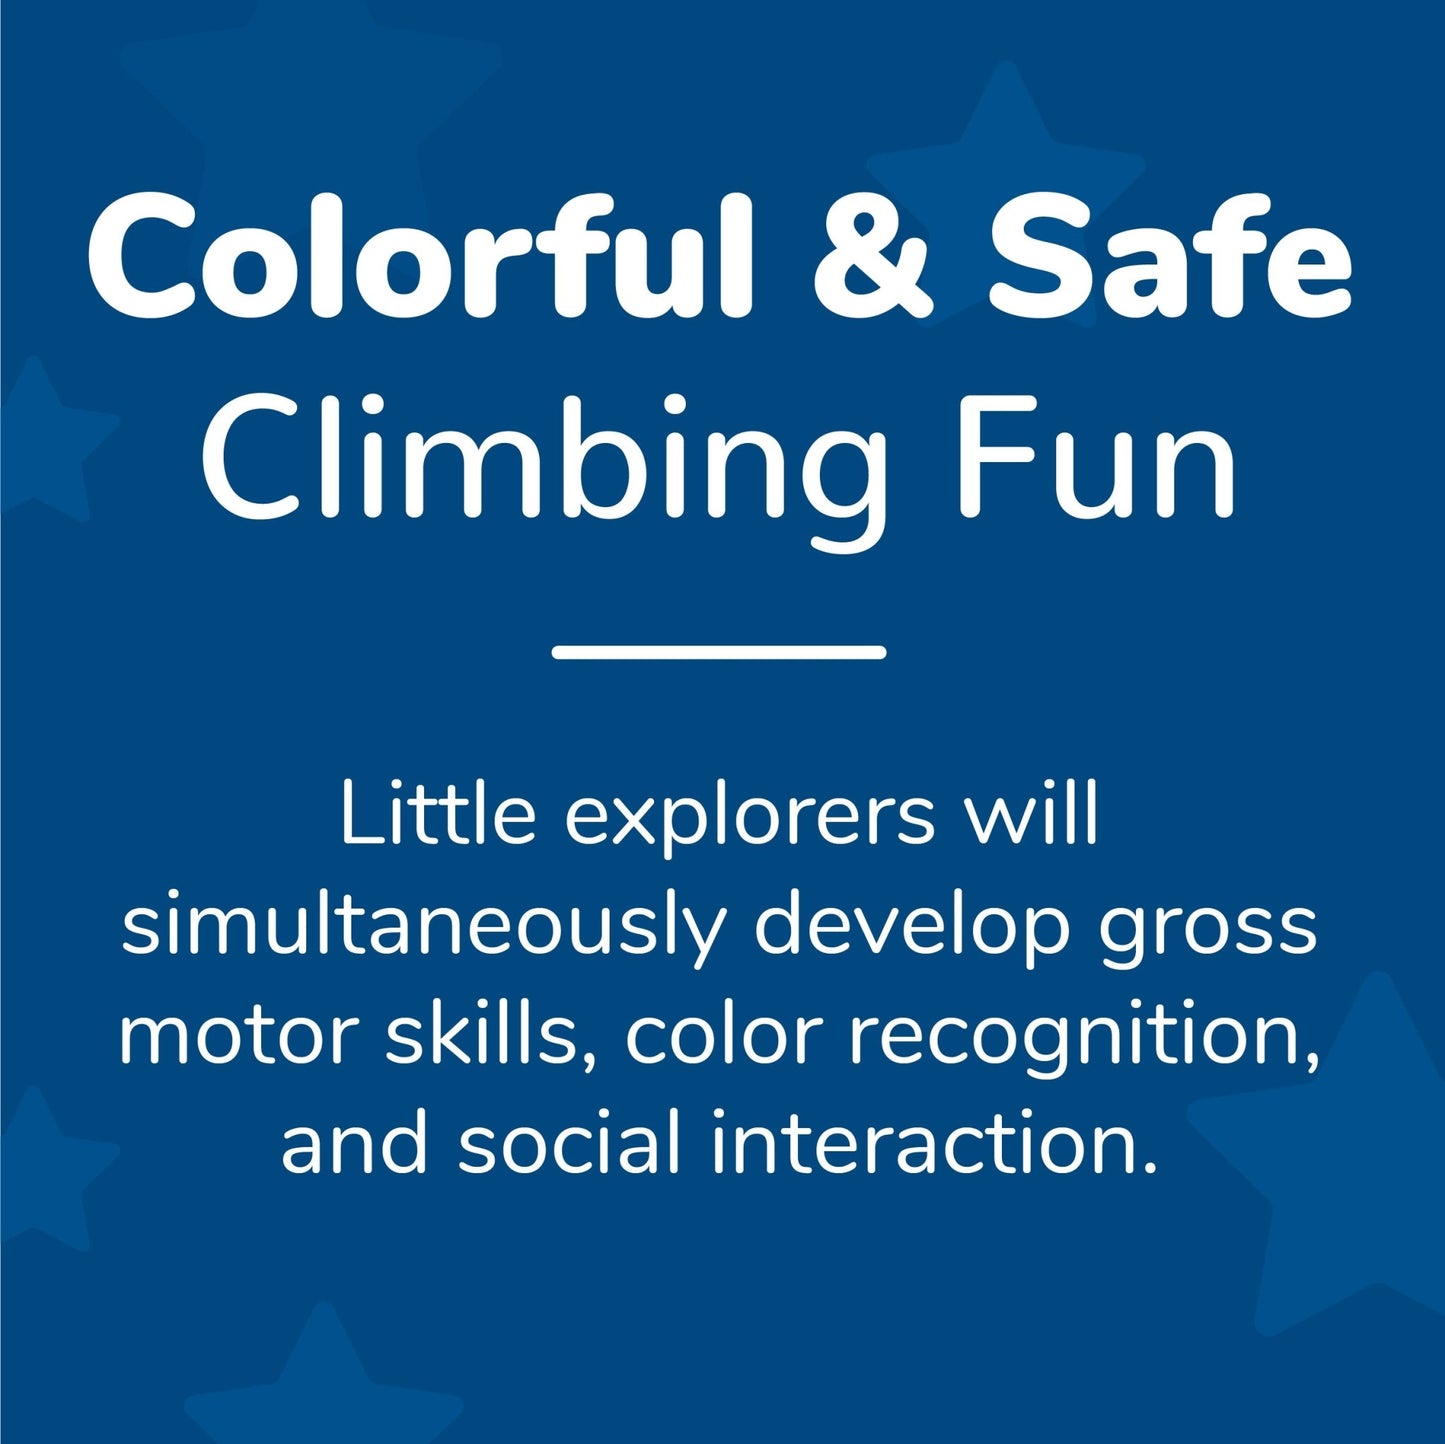 Children's Factory Rainbow Arch Climber (CF321-207) - SchoolOutlet